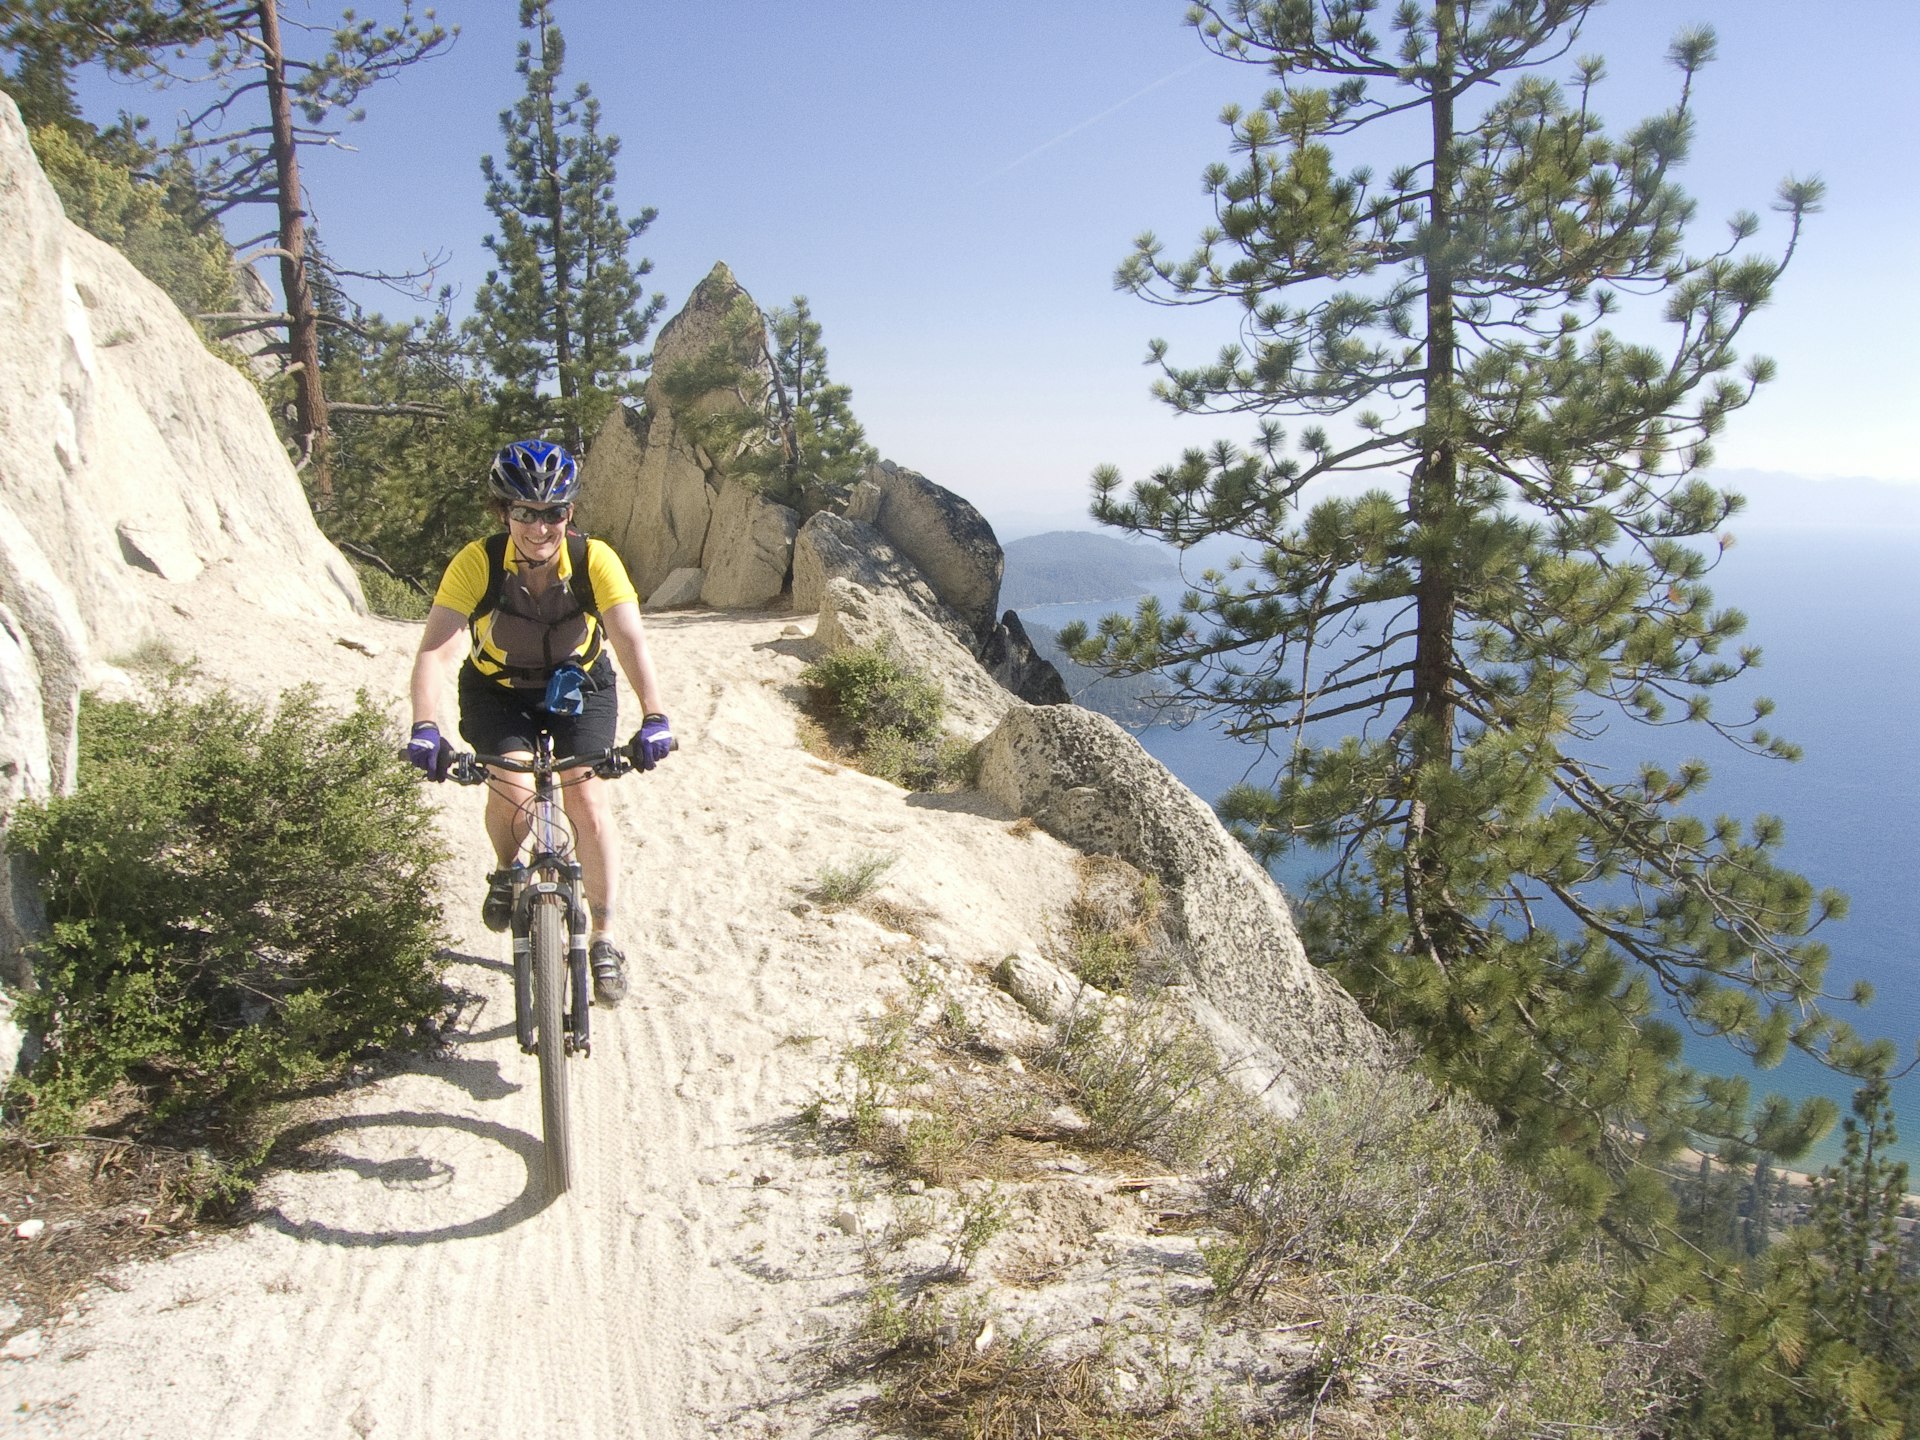 A woman on a mountain bike smiles as she descends a steep sandy path